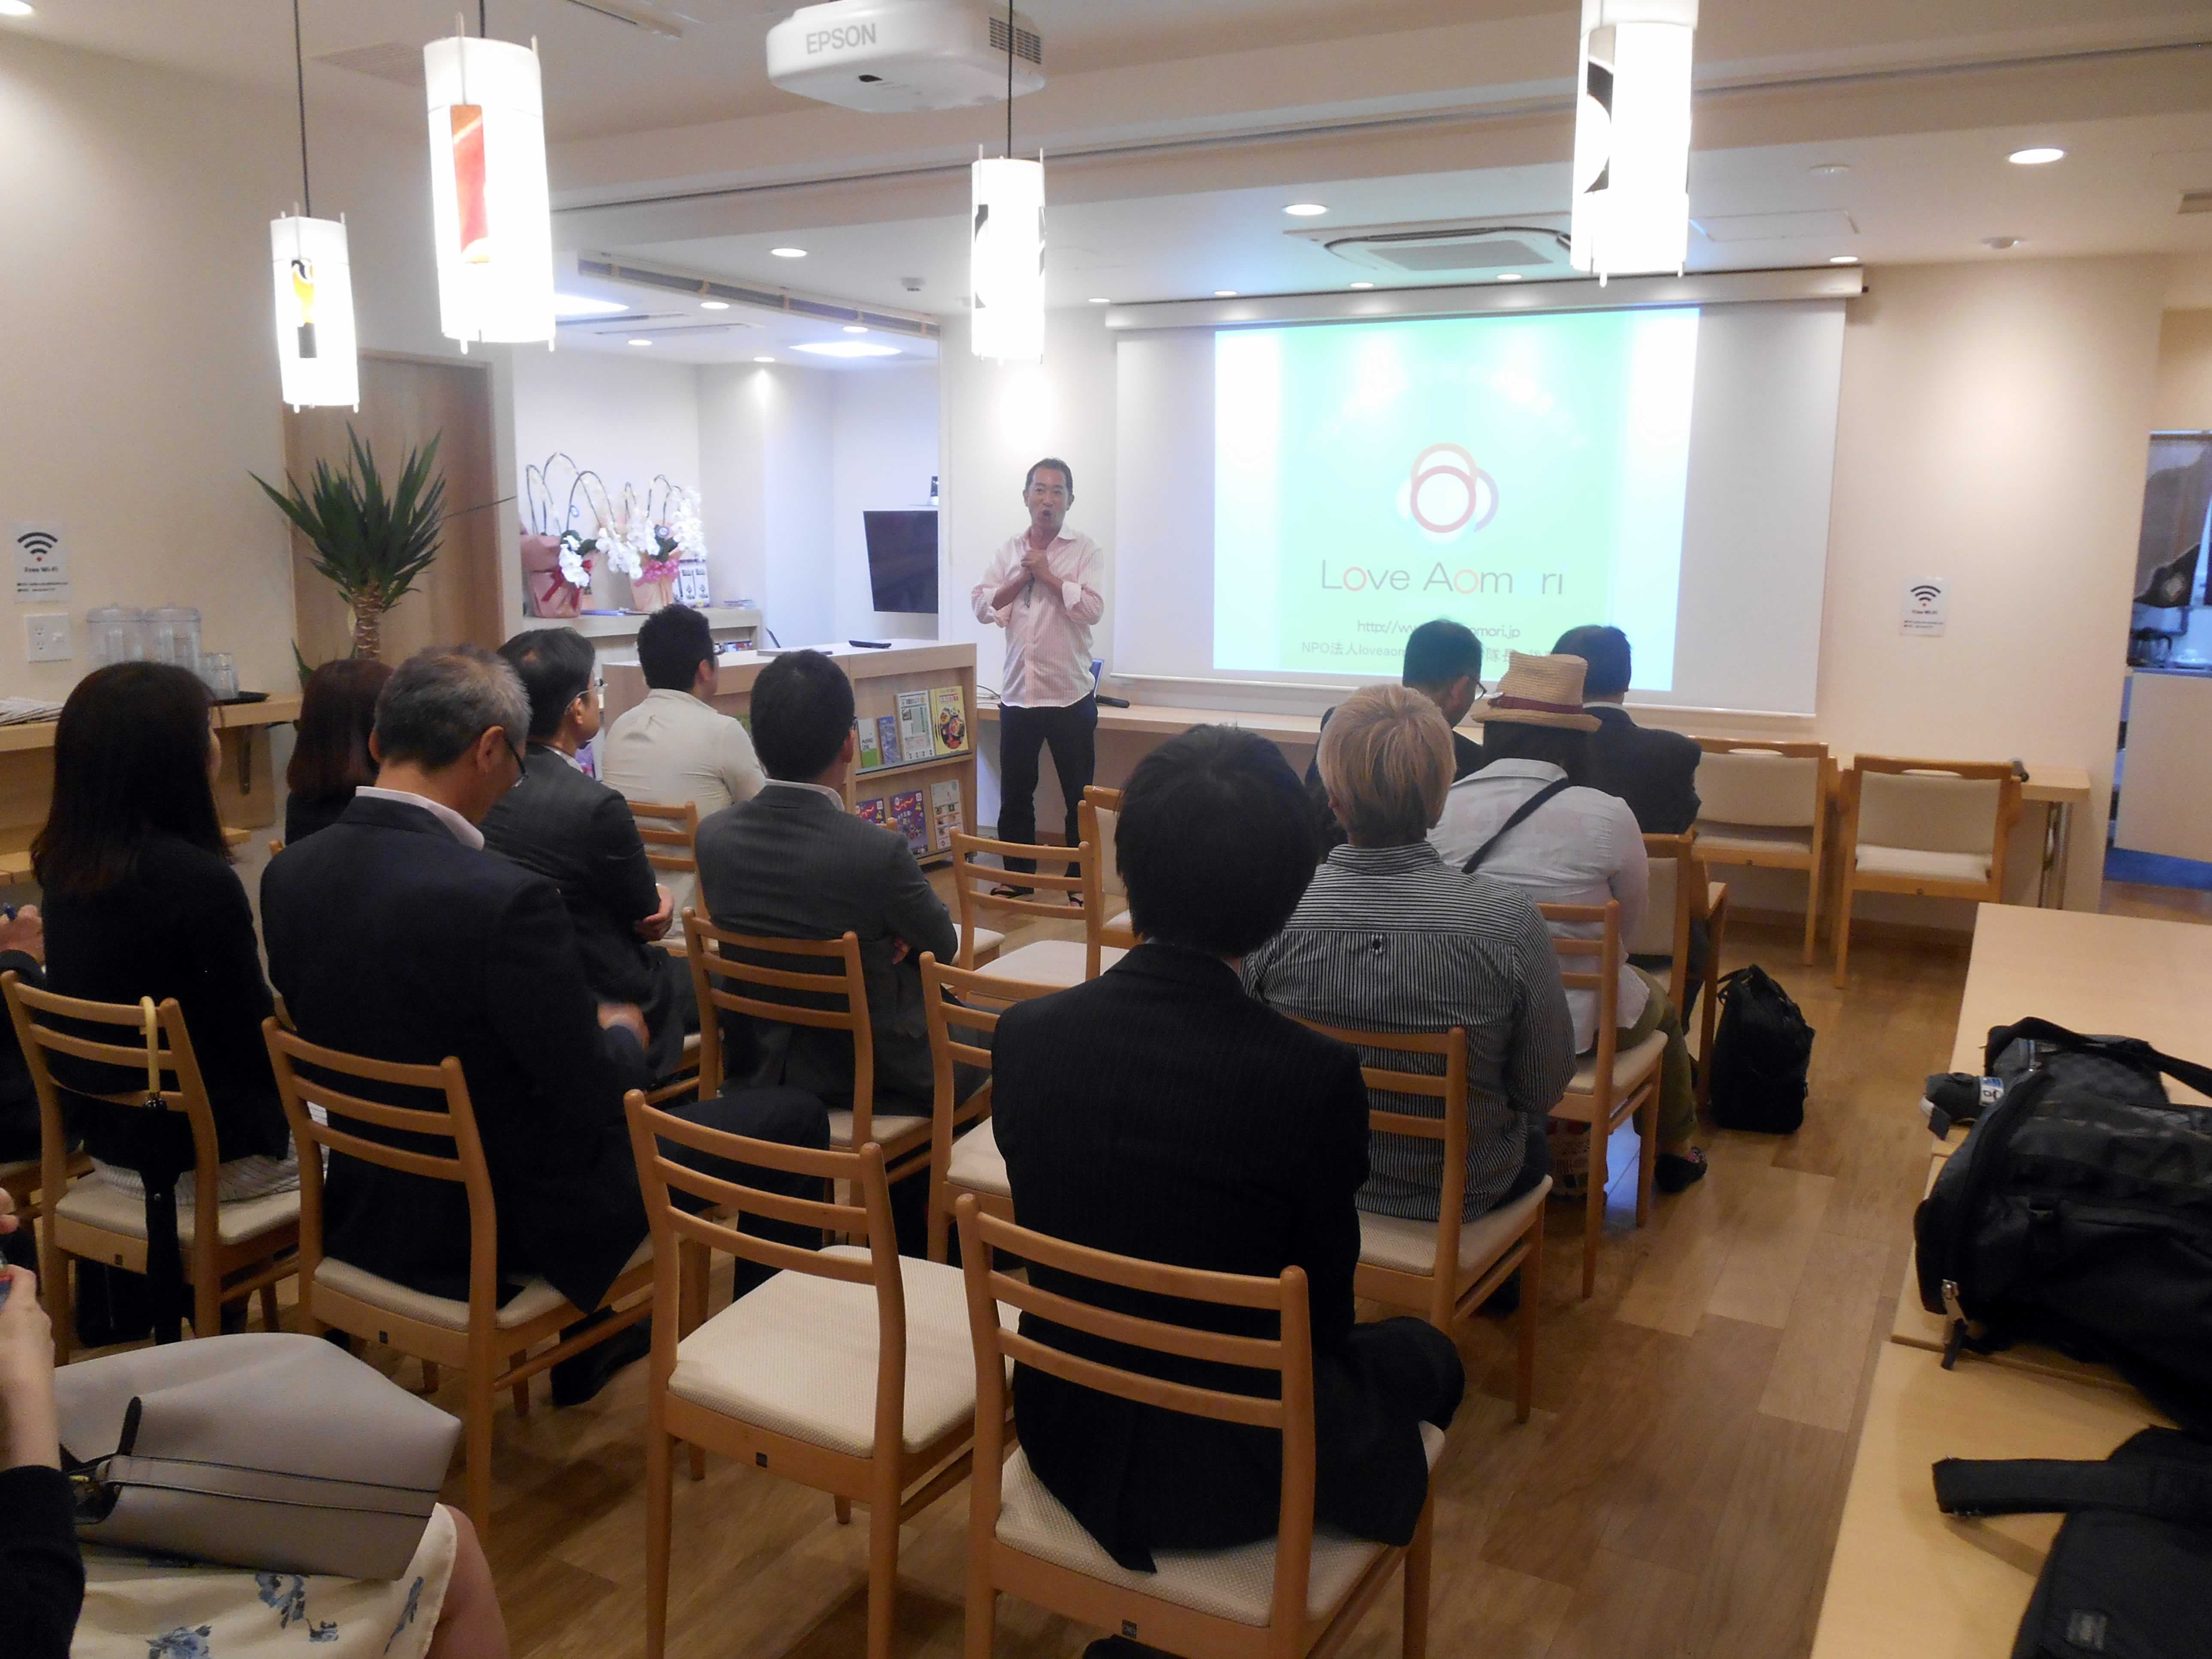 DSCN1664s 4 - AoMoLink〜赤坂〜の第2回勉強会&交流会開催します。